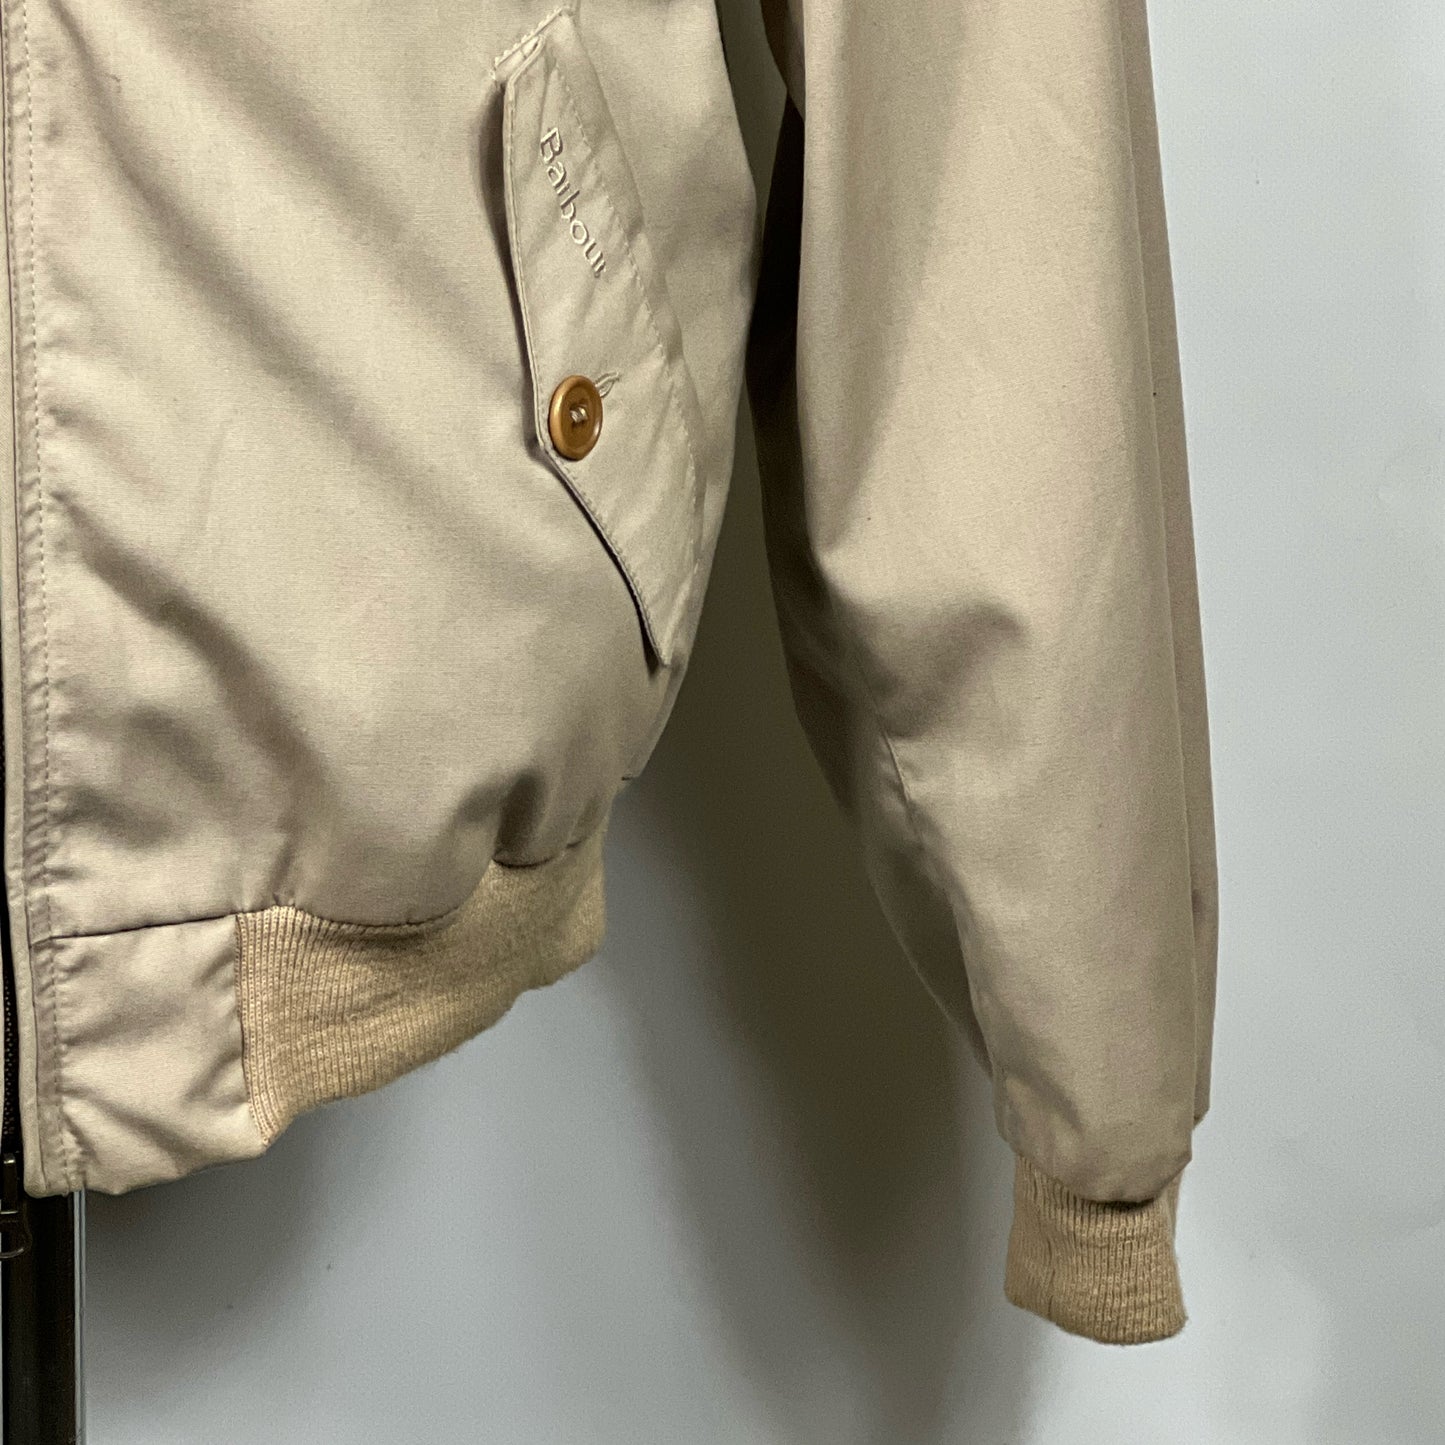 Giacca Barbour Beige corta cotone Medium - Beige Cotton Jacket Size Medium